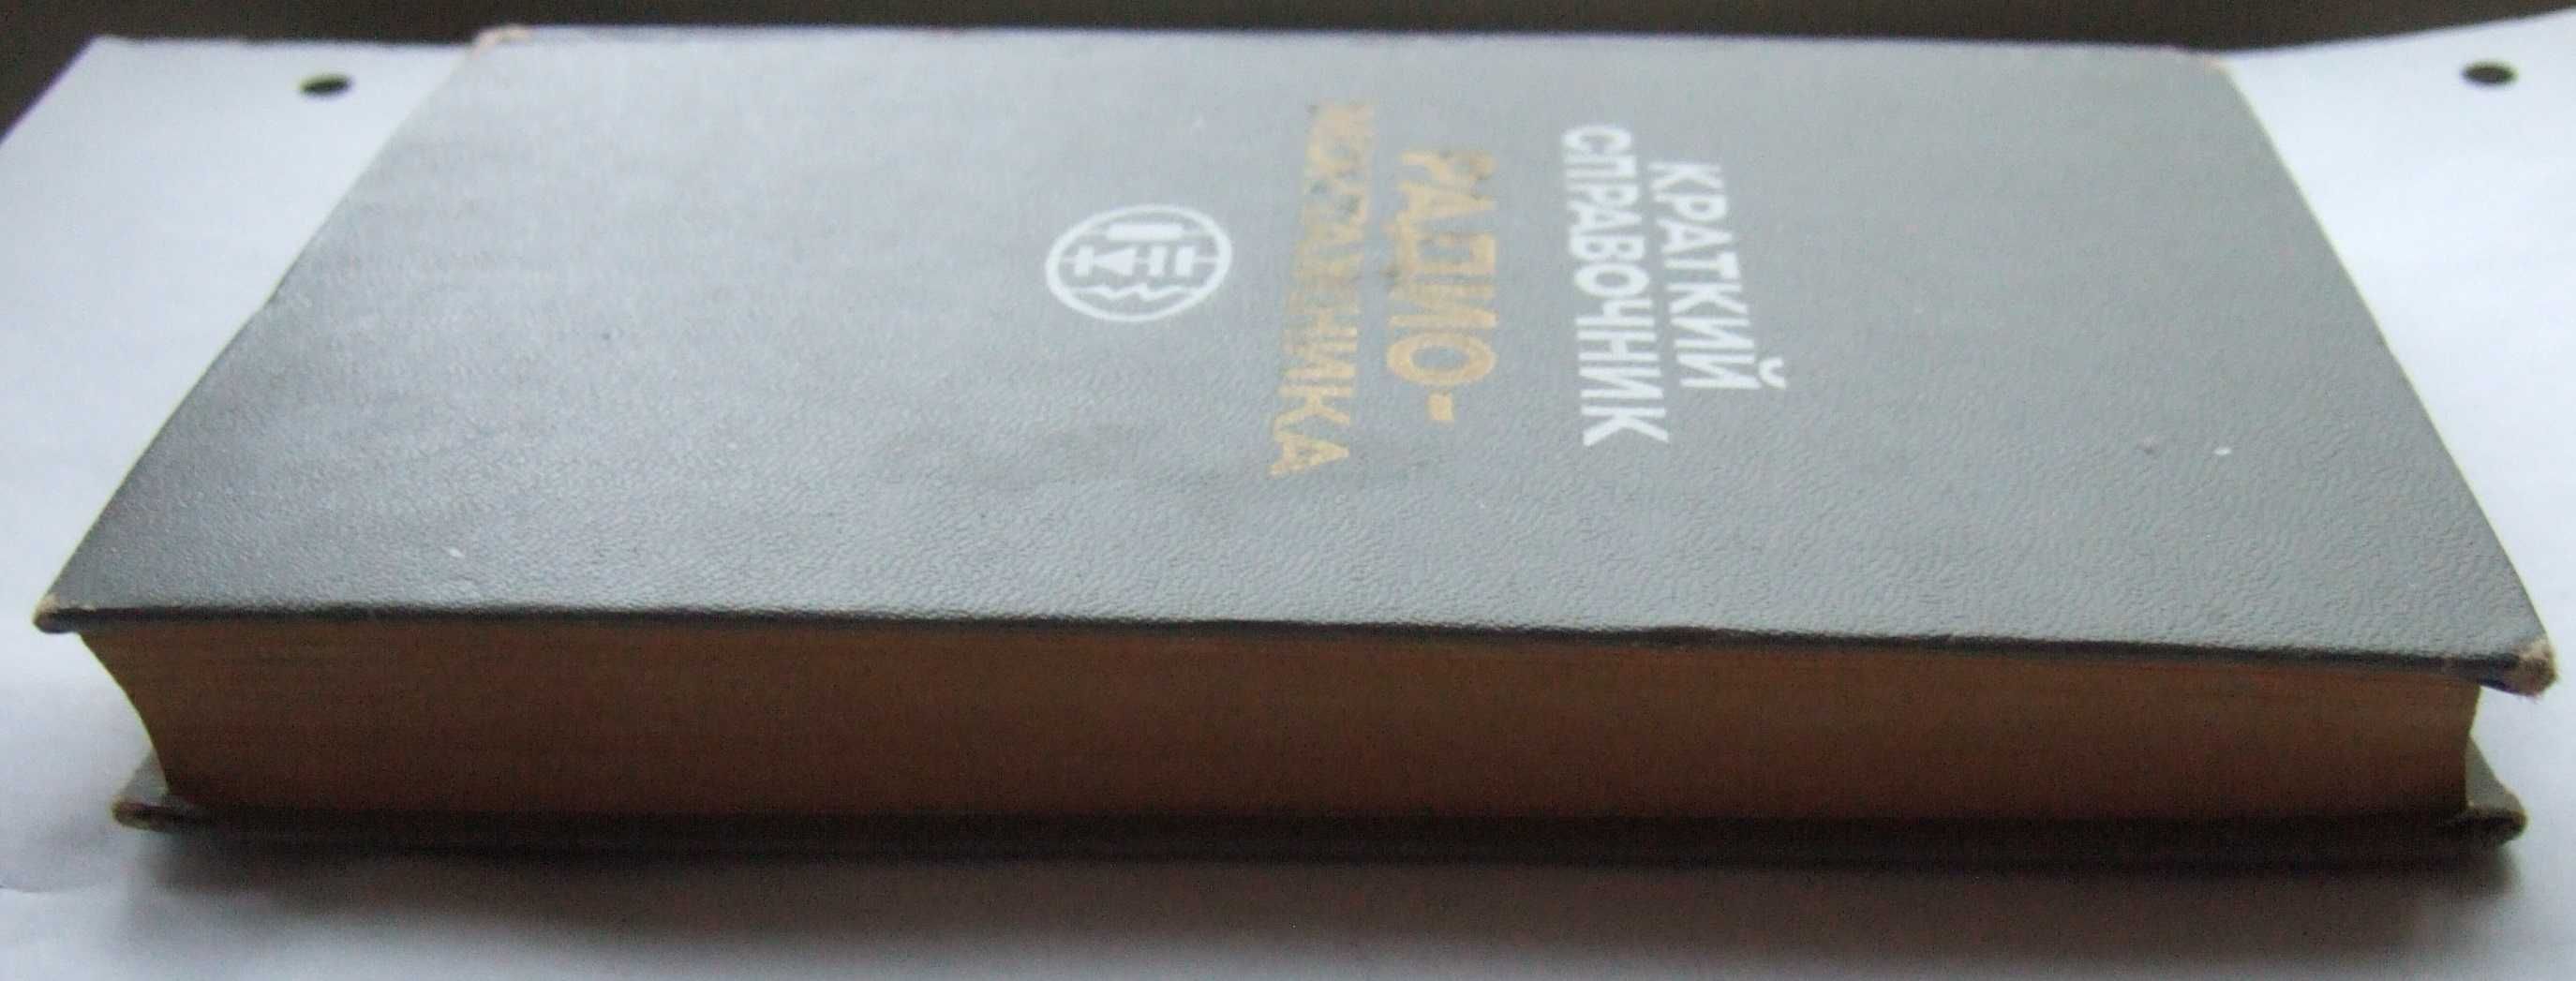 Краткий справочник радиомонтажника. 1974 рік, тираж 65000